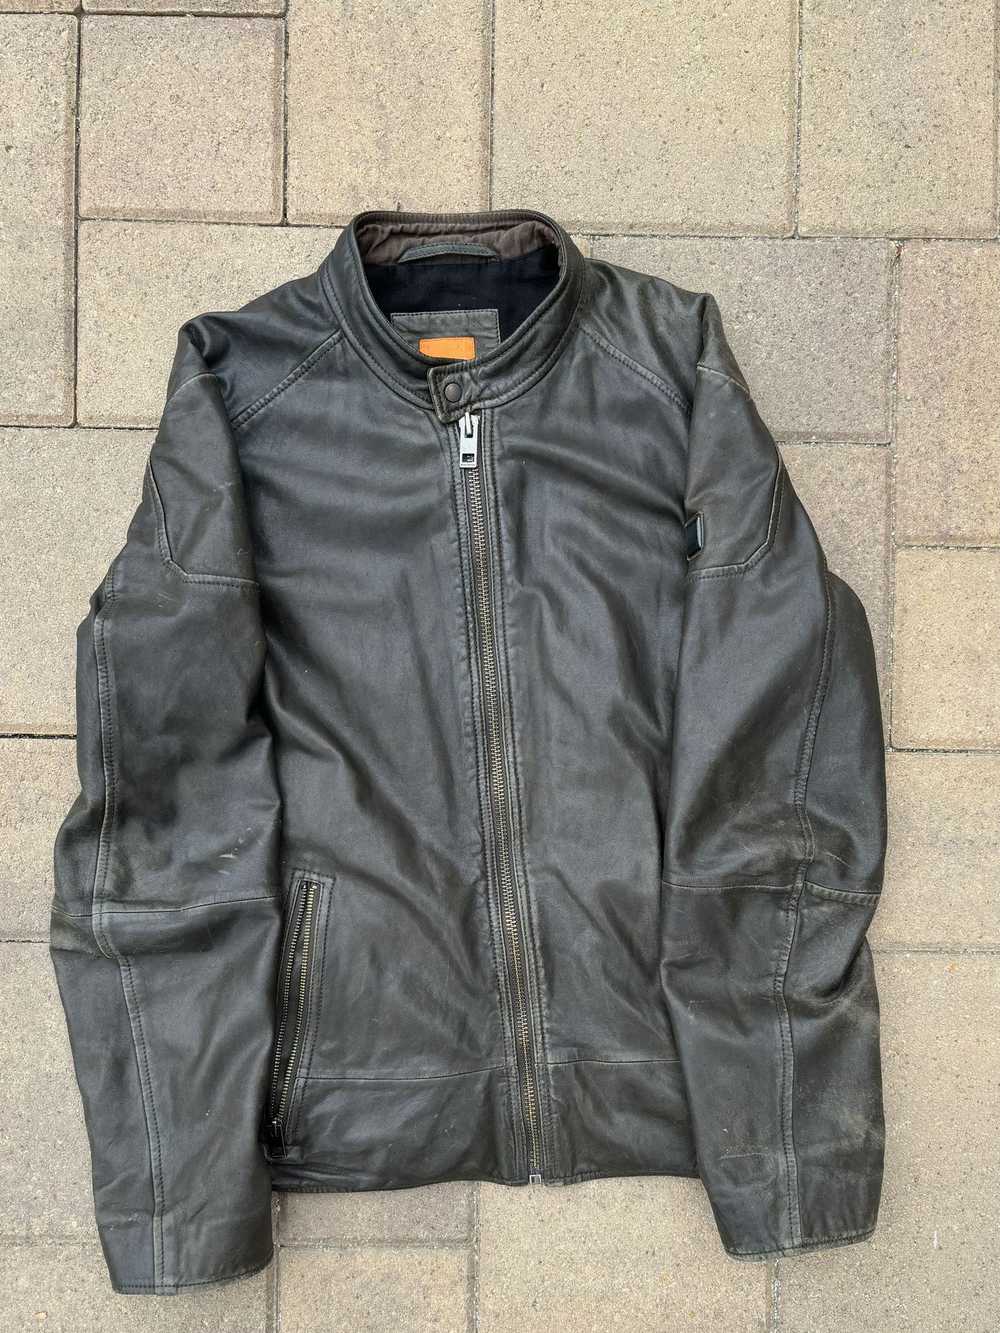 Hugo Boss Hugo Boss Leather Jacket - image 1